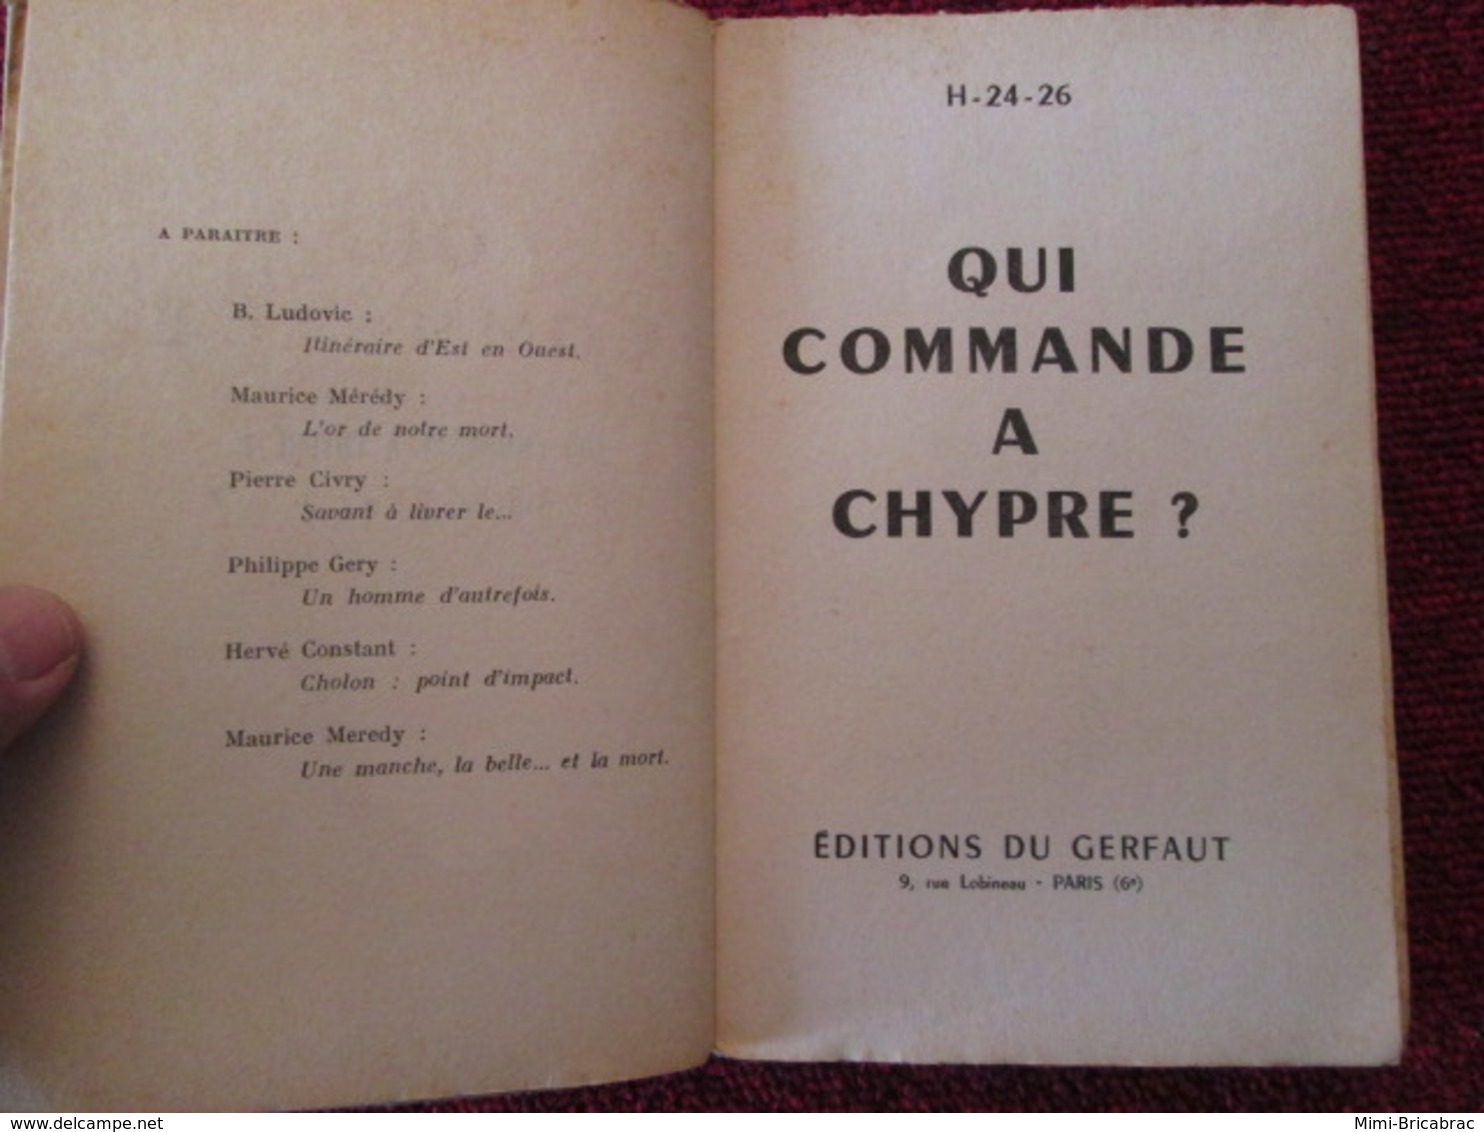 POL2013/4 EDITIONS DU GERFAUT 1957 / QUI COMMANDE A CHYPRE ? / H 24 26 - Old (before 1960)